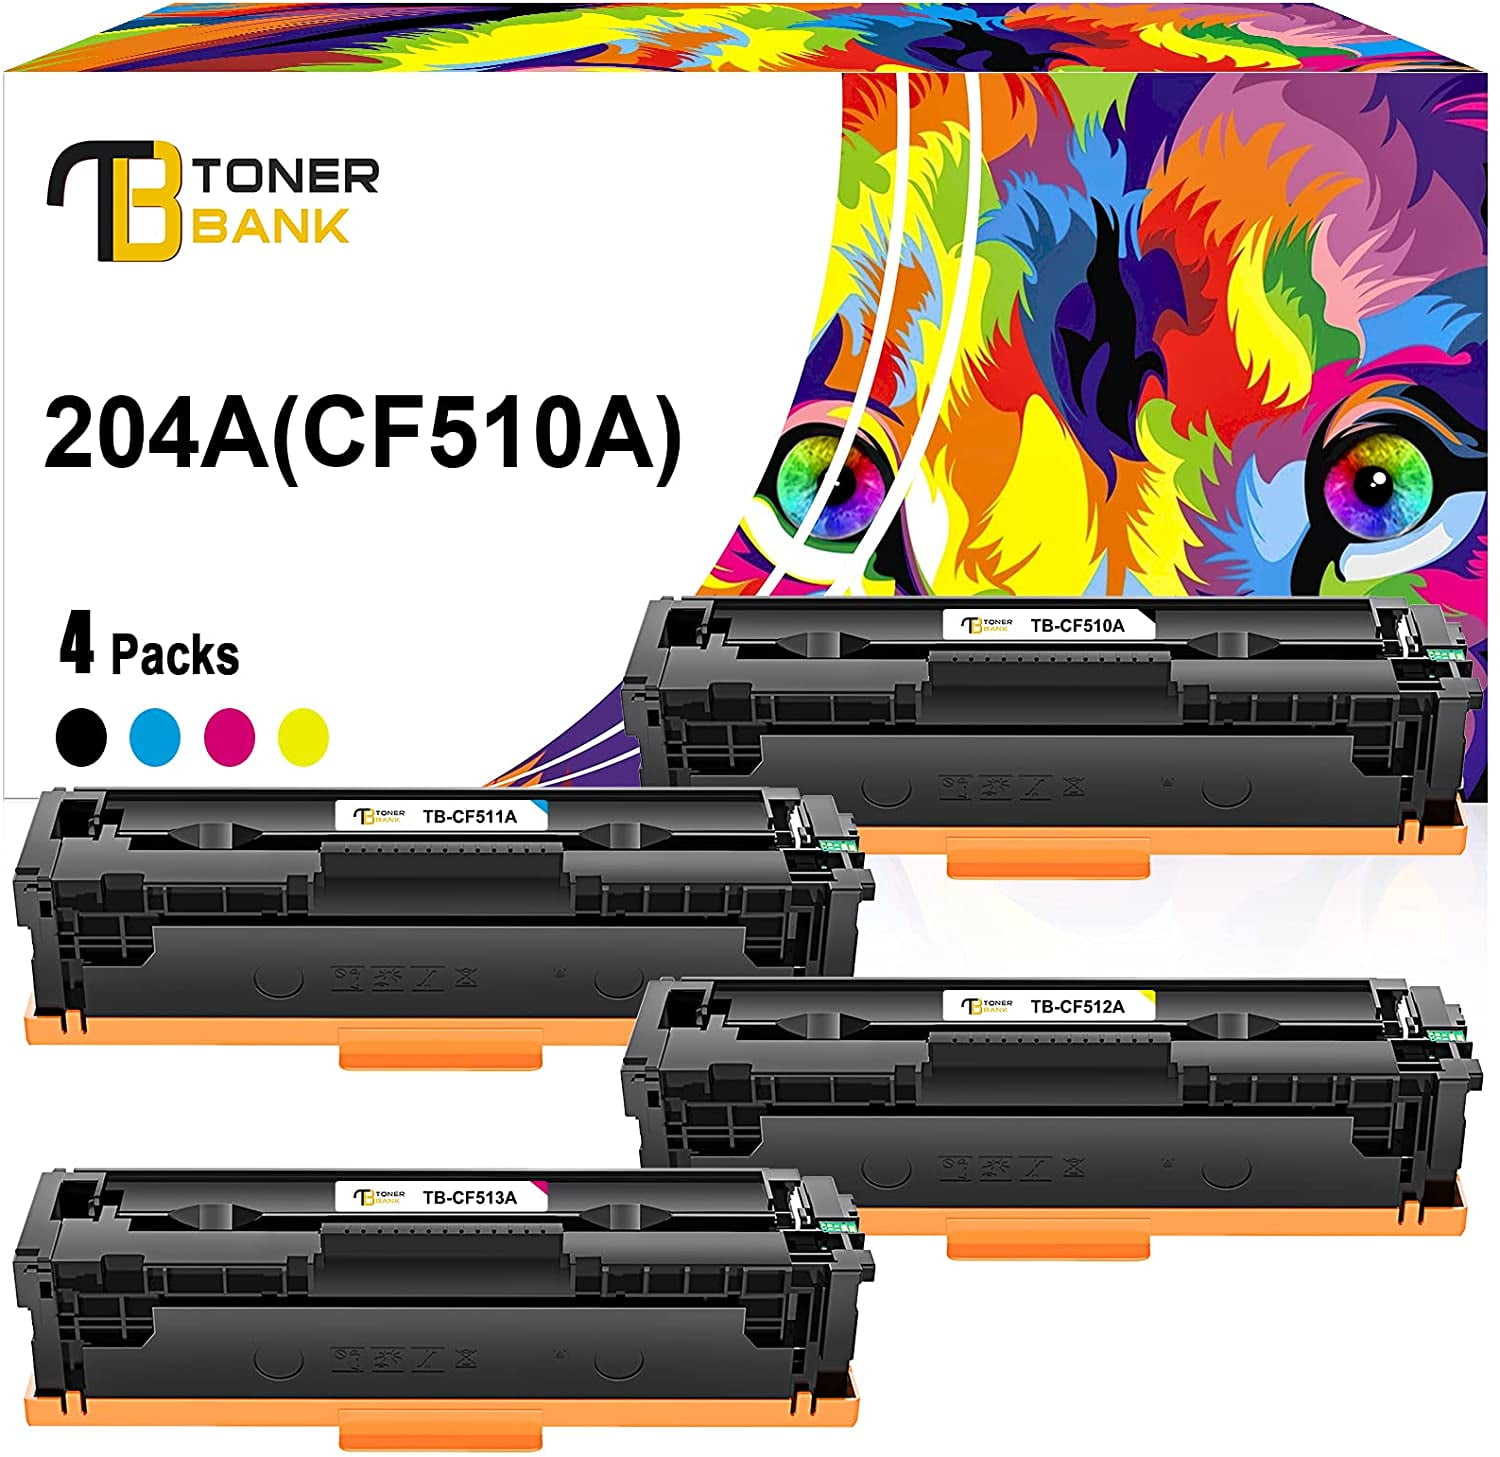 4 Pack CF510A Black Toner Cartridge For HP 204A Color LaserJet Pro M180nw M181fw 